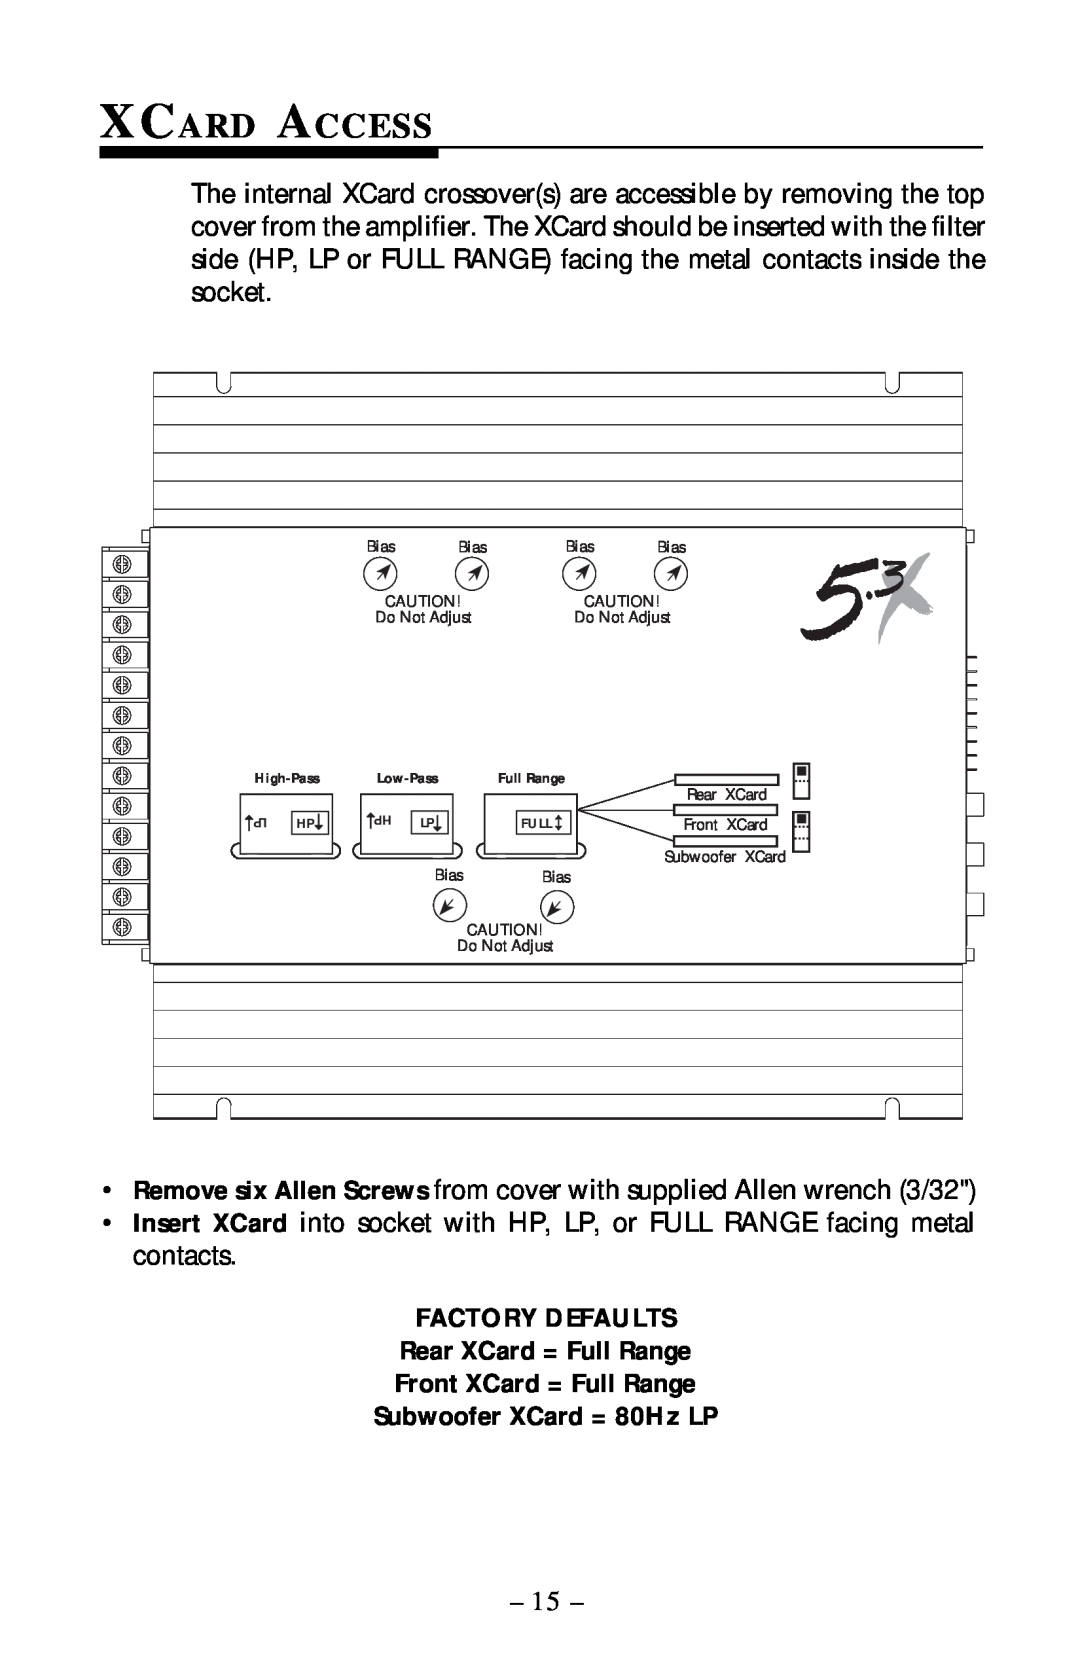 Rockford Fosgate 5.3x manual Xcard Access, FACTORY DEFAULTS Rear XCard = Full Range, Front XCard = Full Range 